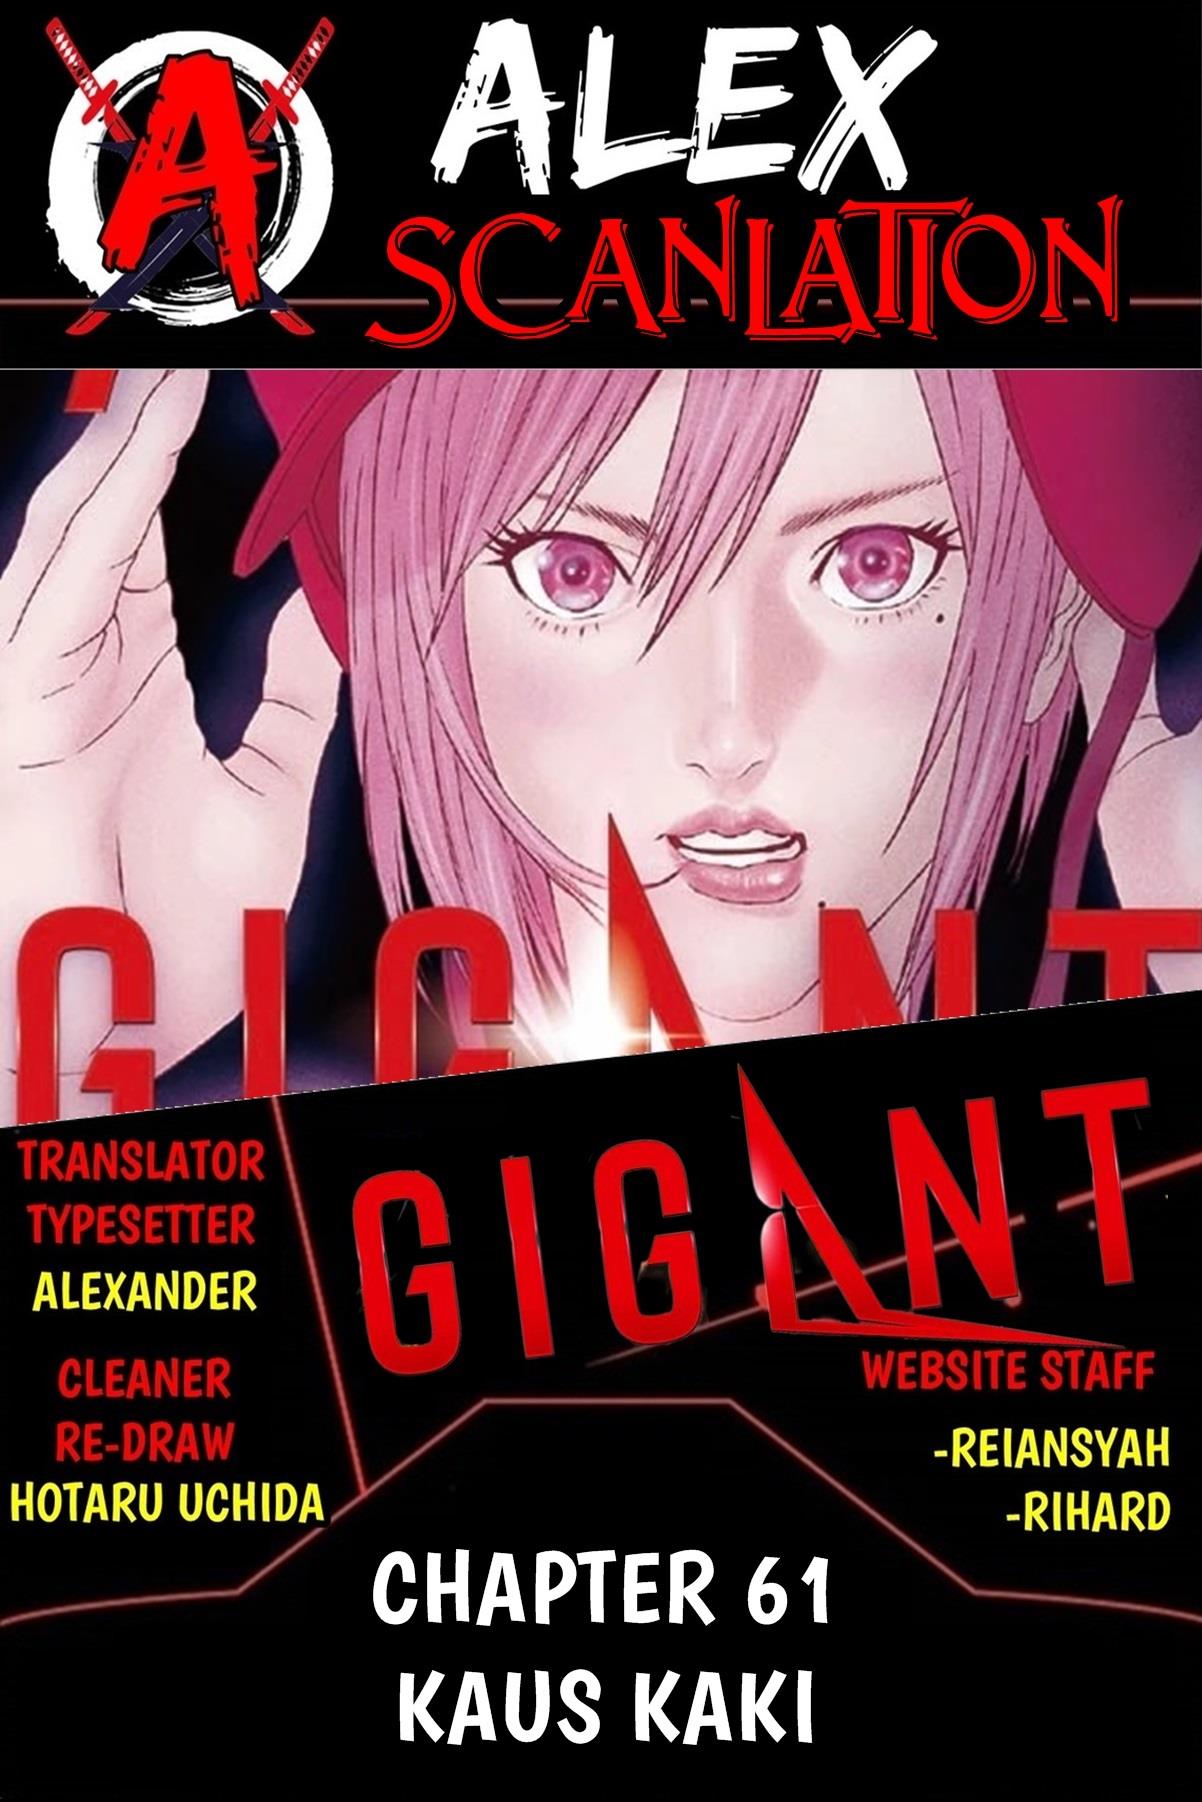 GIGANT Chapter 61